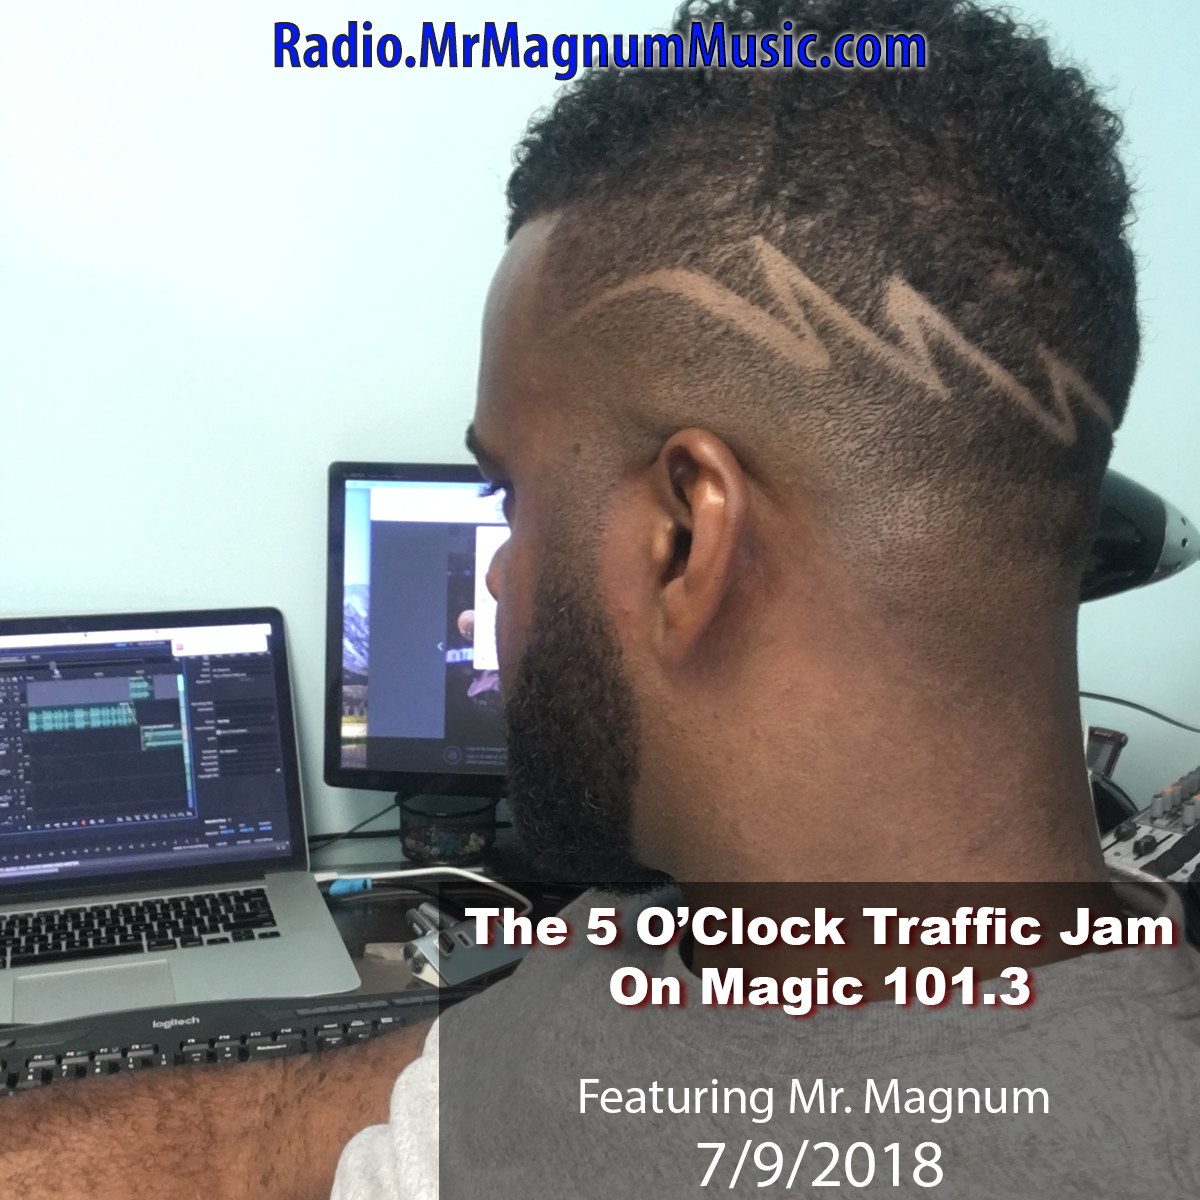 The 5 O'Clock Traffic Jam 20180709 featuring Gainesville's #1 DJ, Mr. Magnum on Magic 101.3